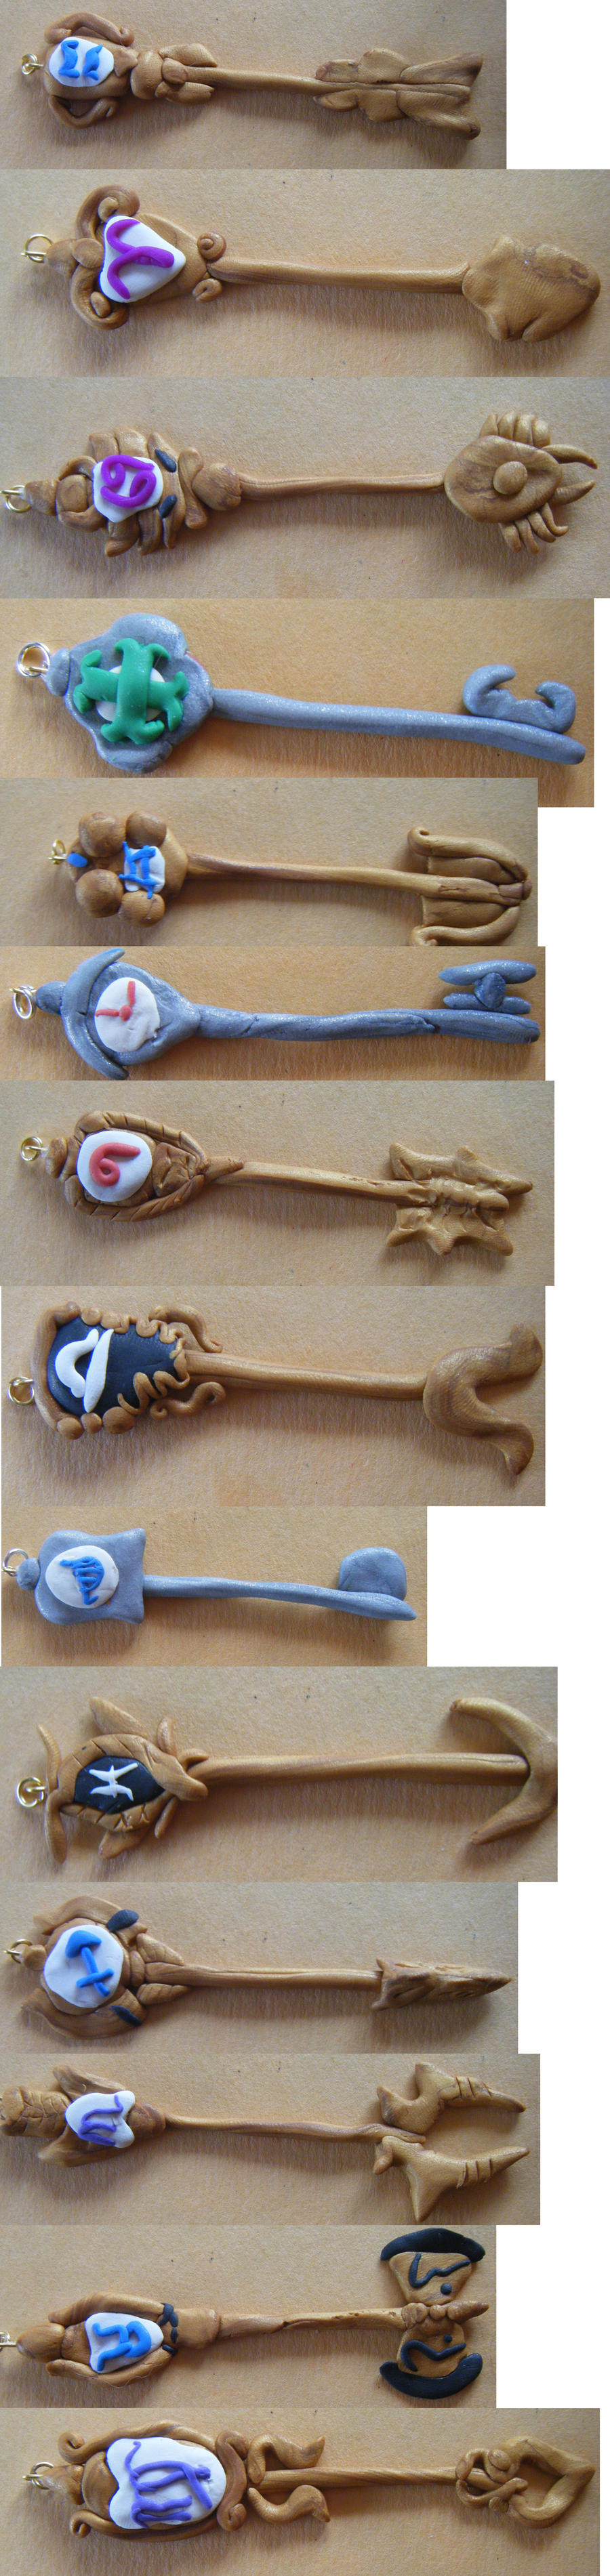 Fairy Tail Keys